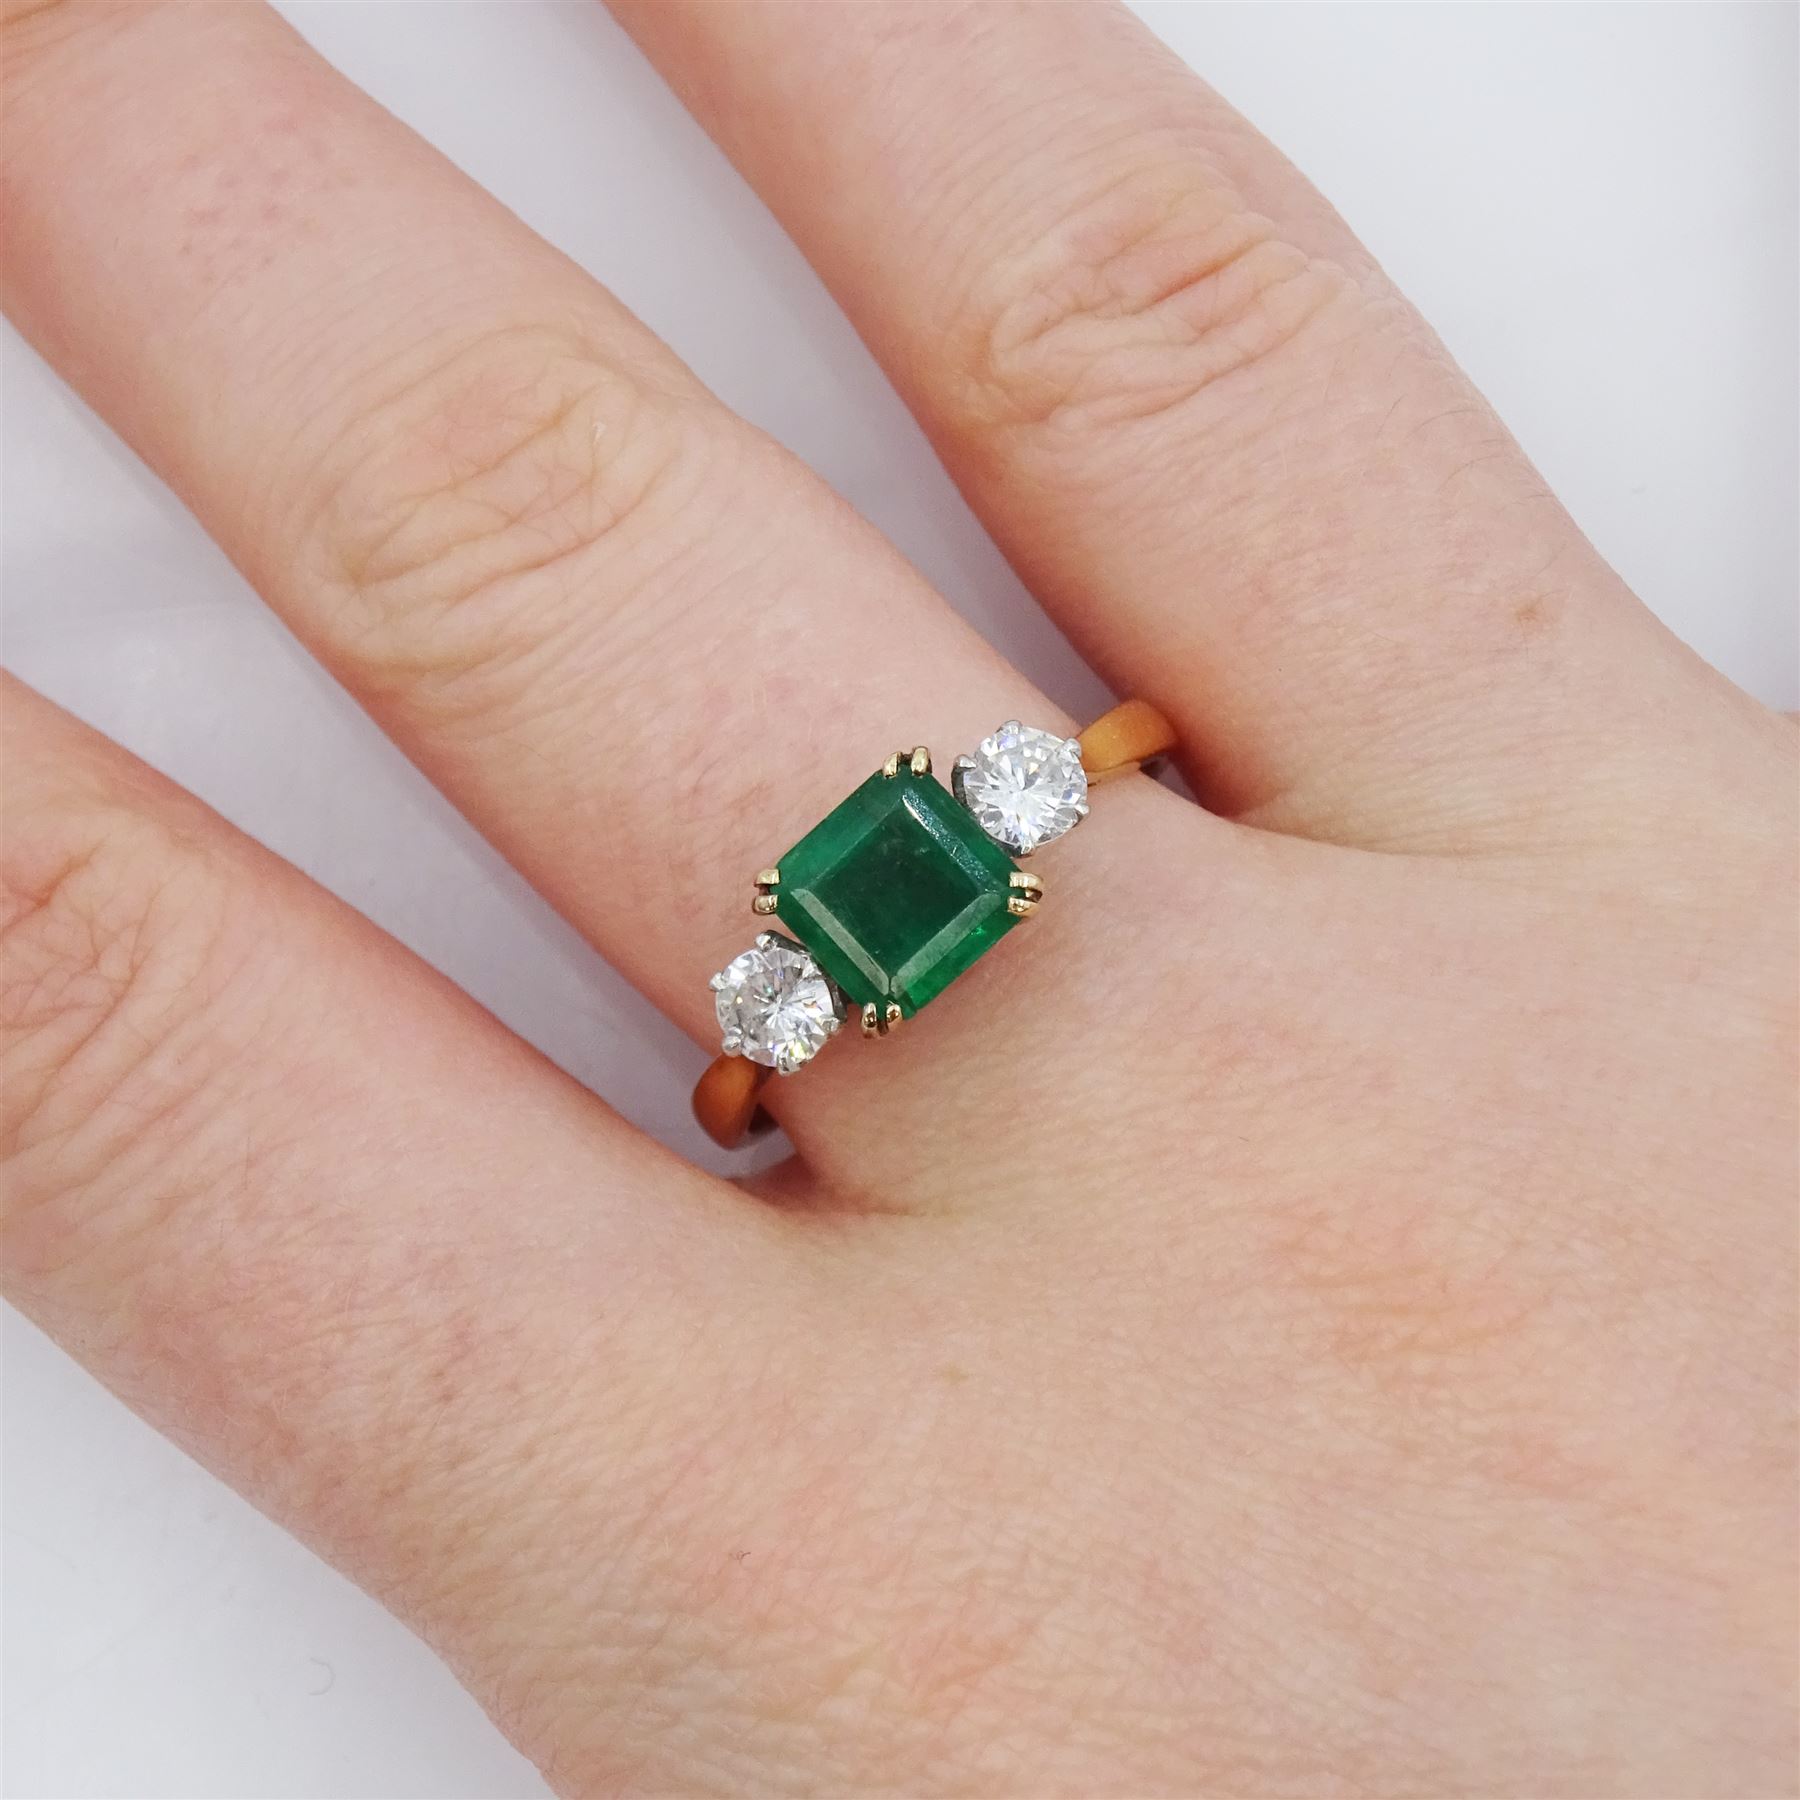 Gold three stone emerald and round brilliant cut diamond ring - Image 2 of 4